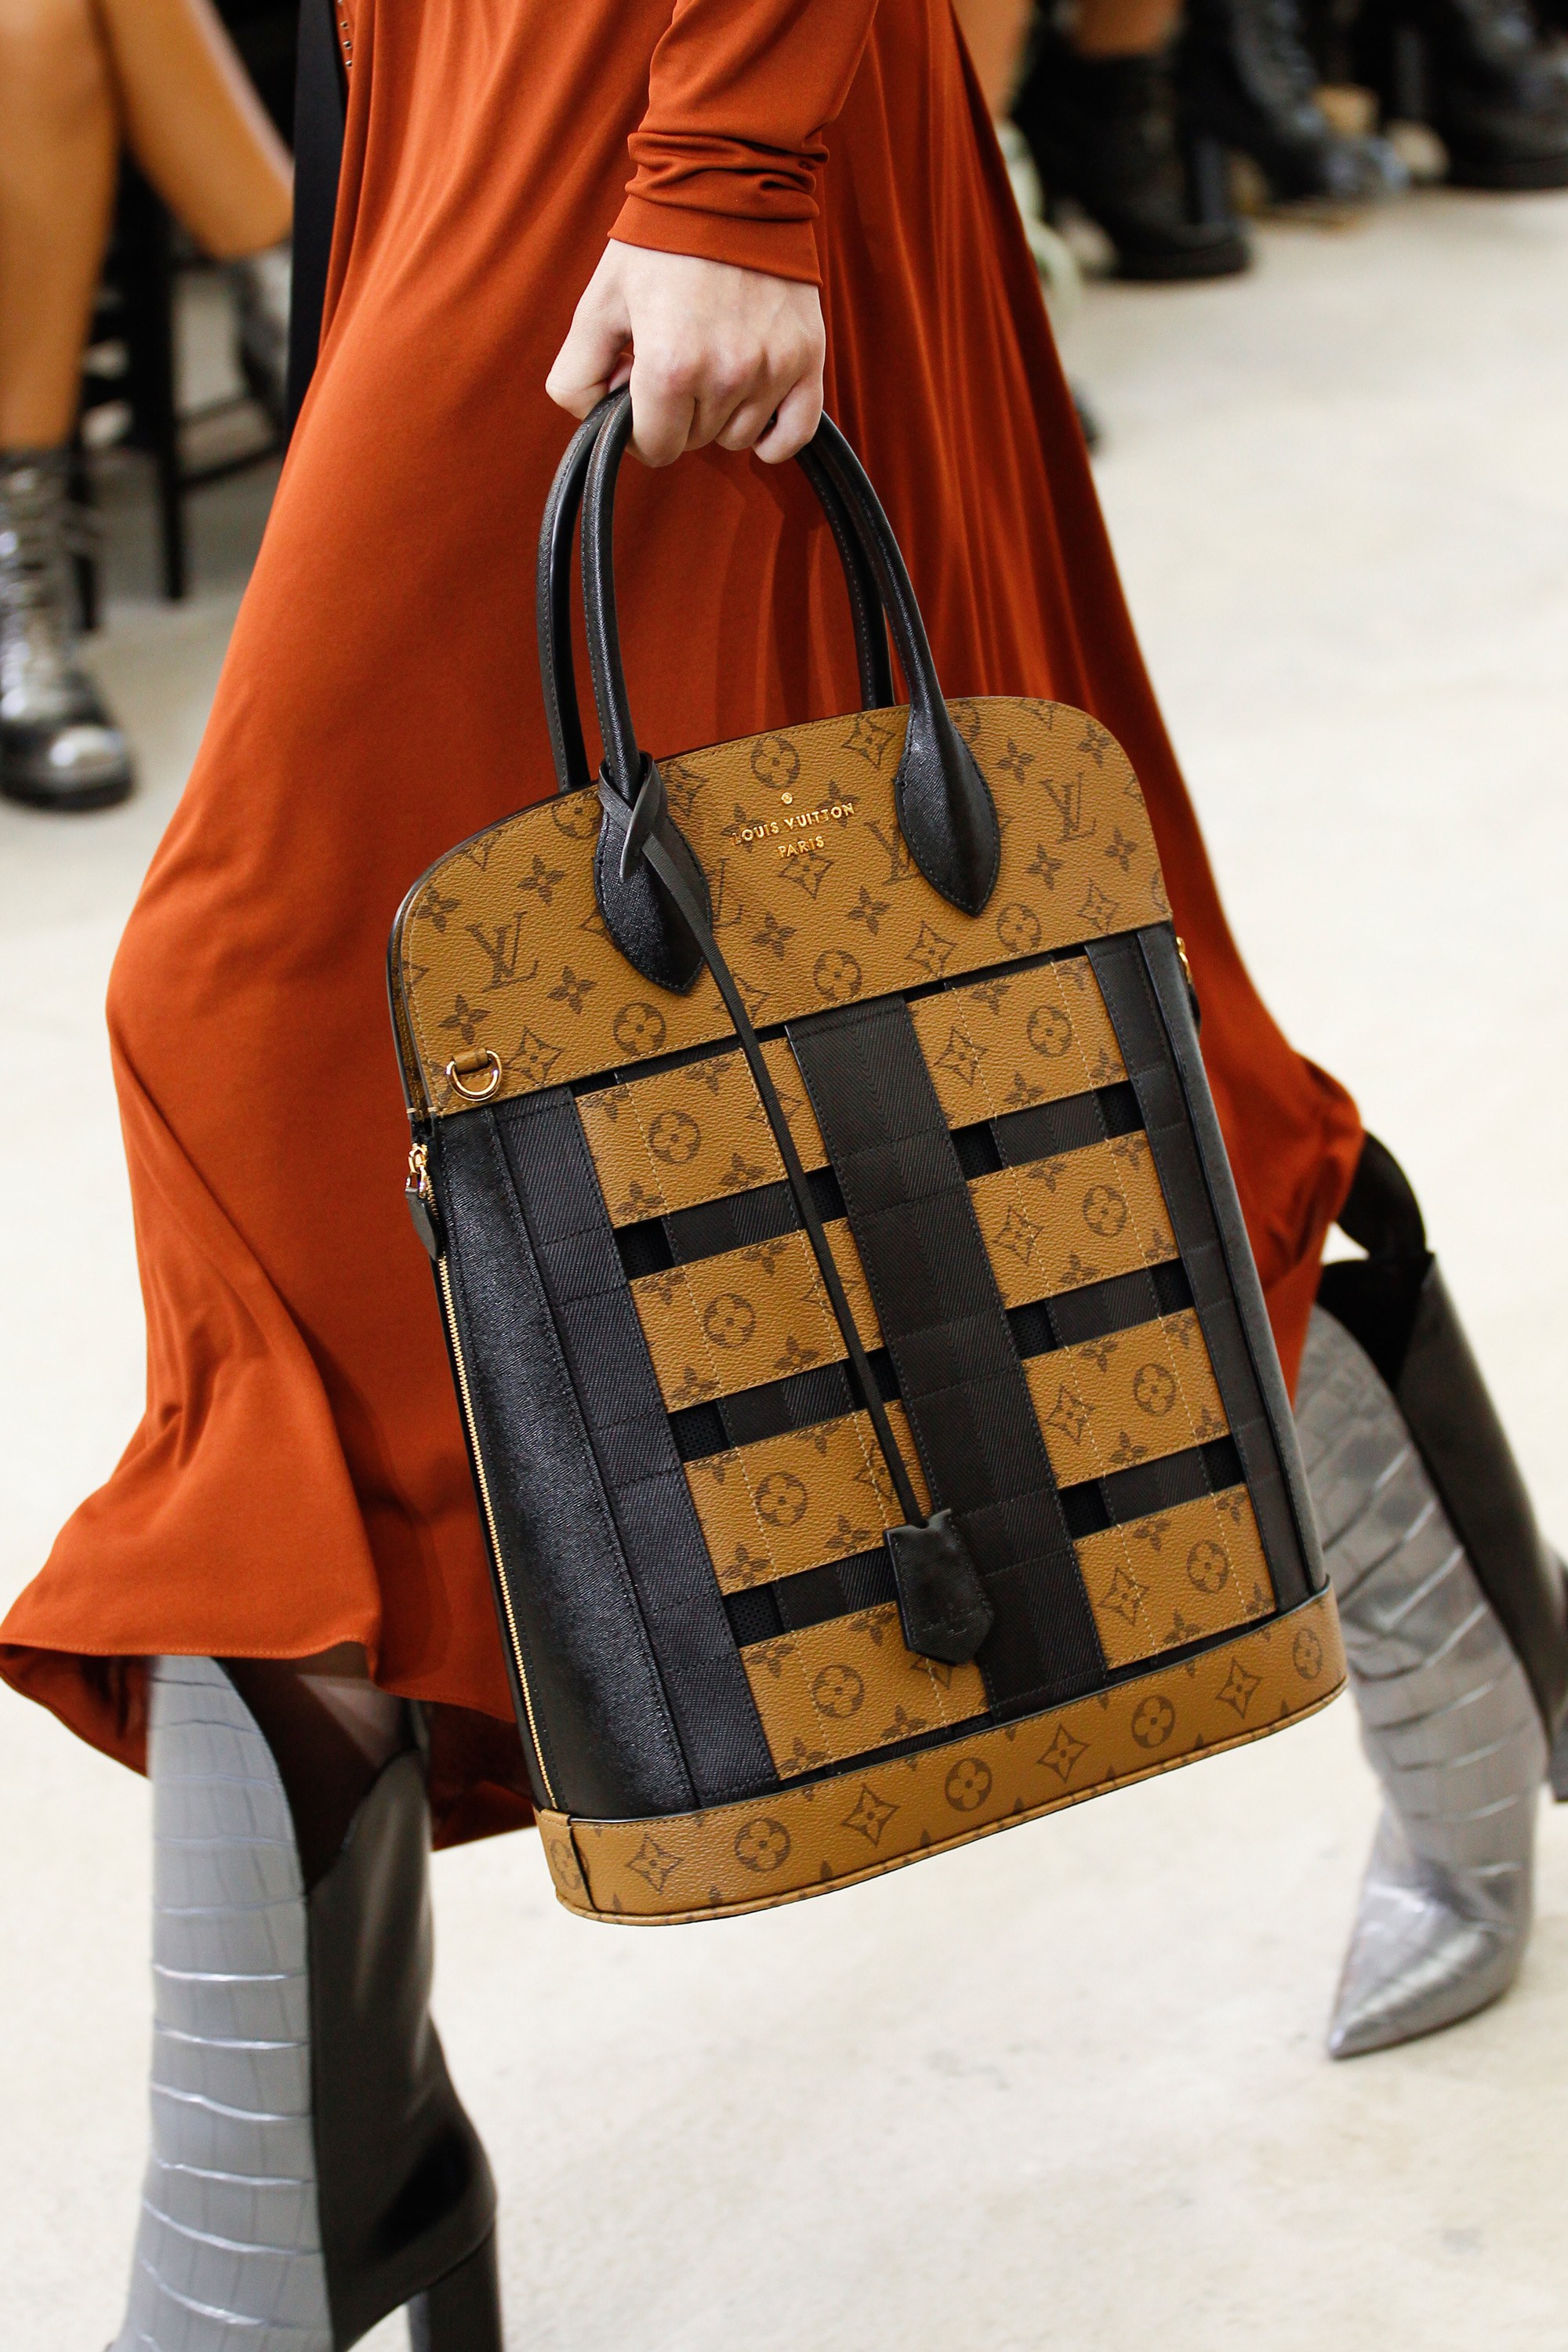 Louis Vuitton - Monogram Canvas Pallas Cosmetic Clutch Bag - Catawiki